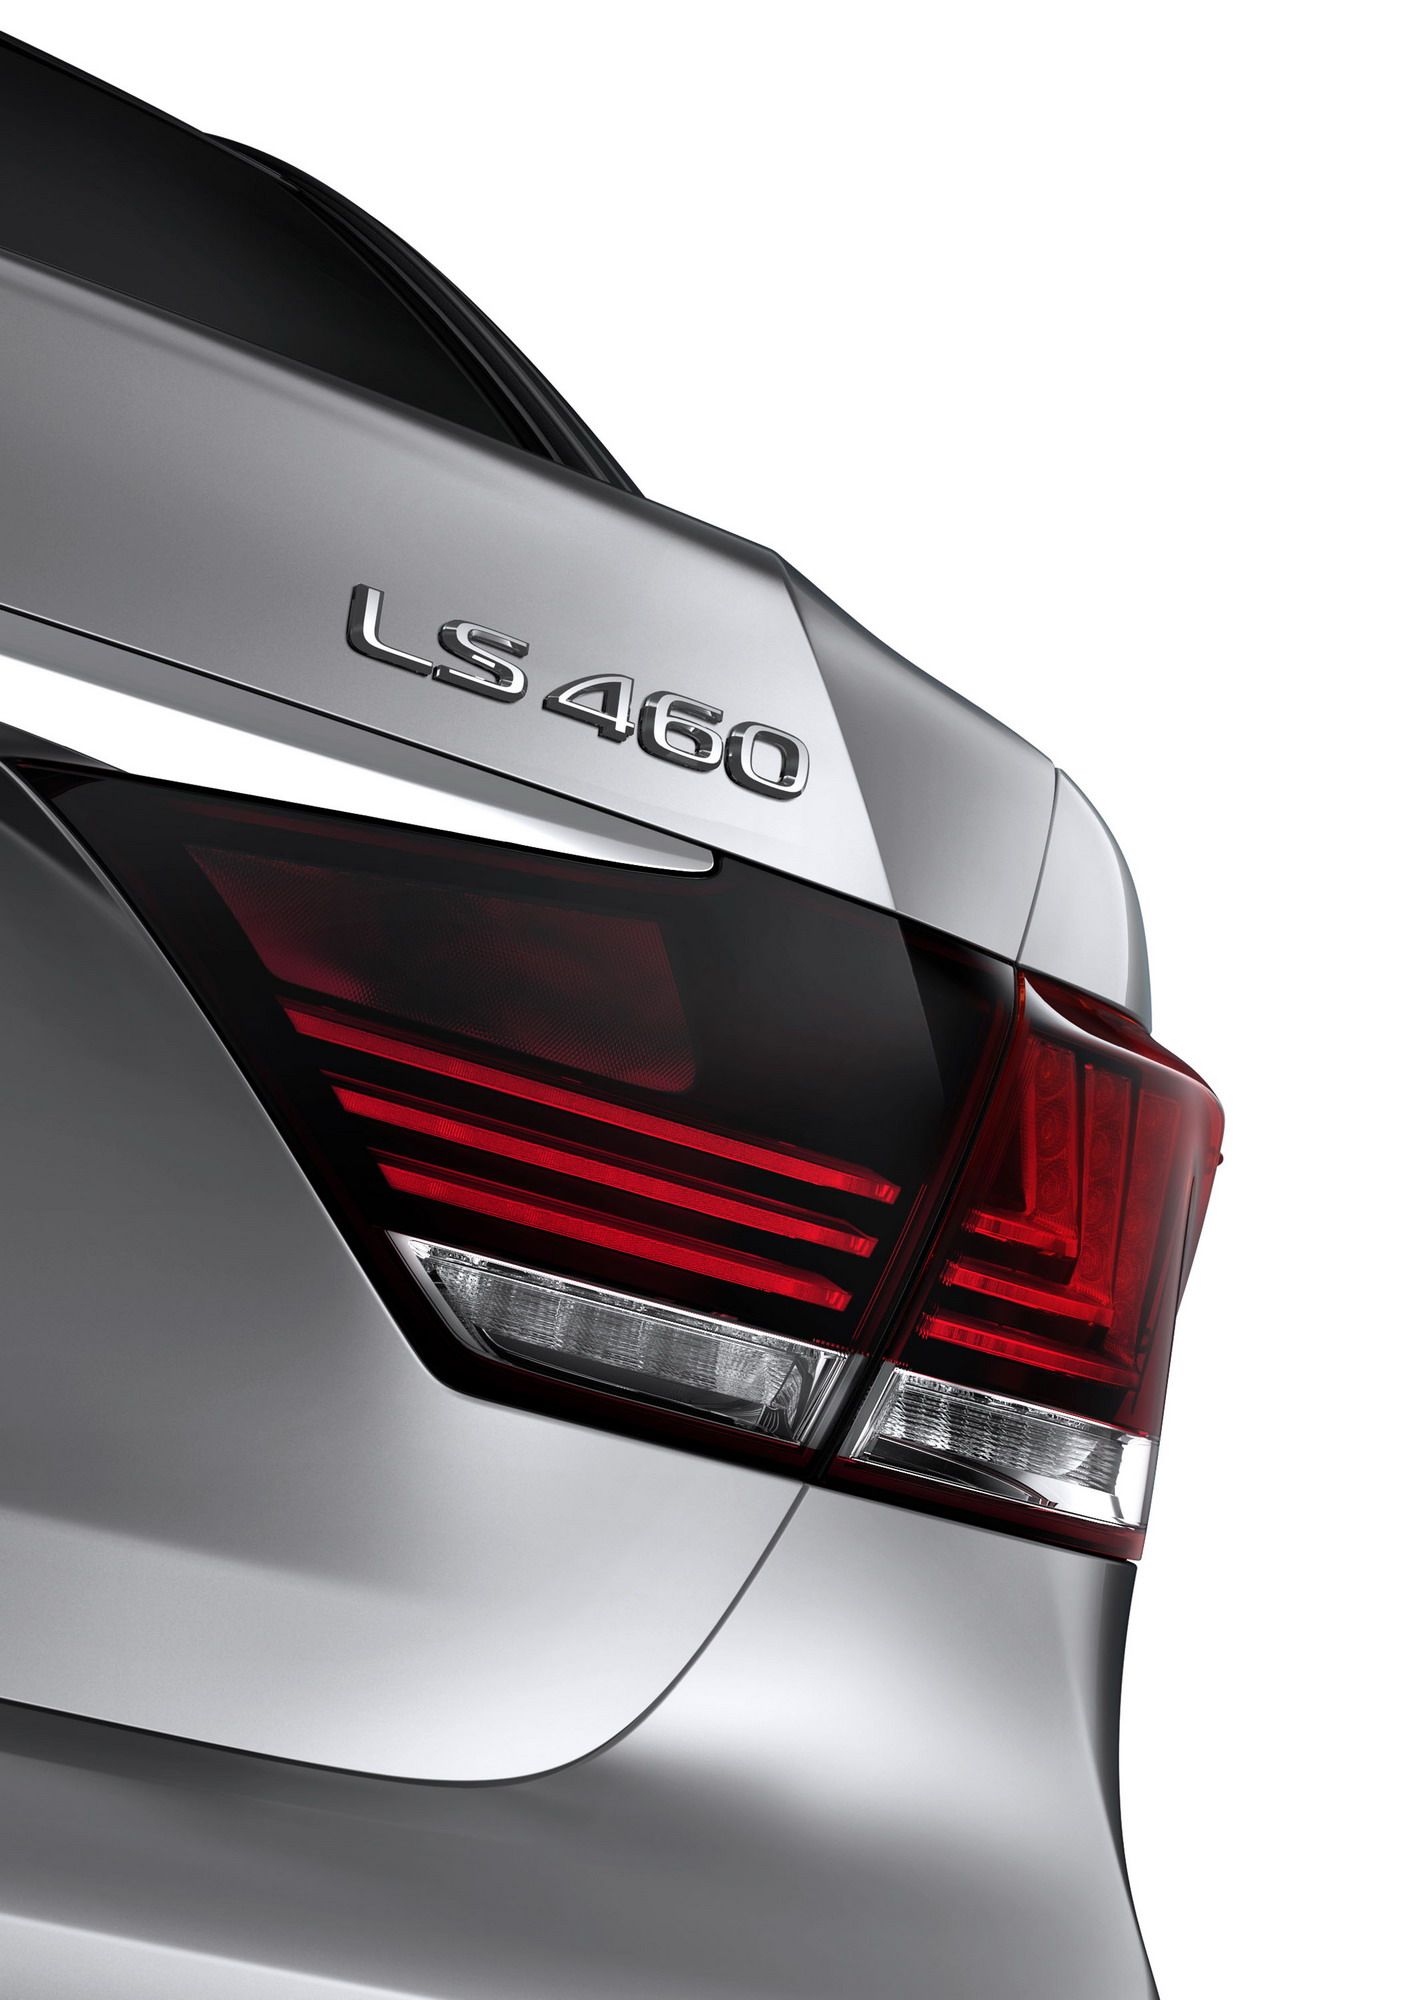 2013 Lexus LS460